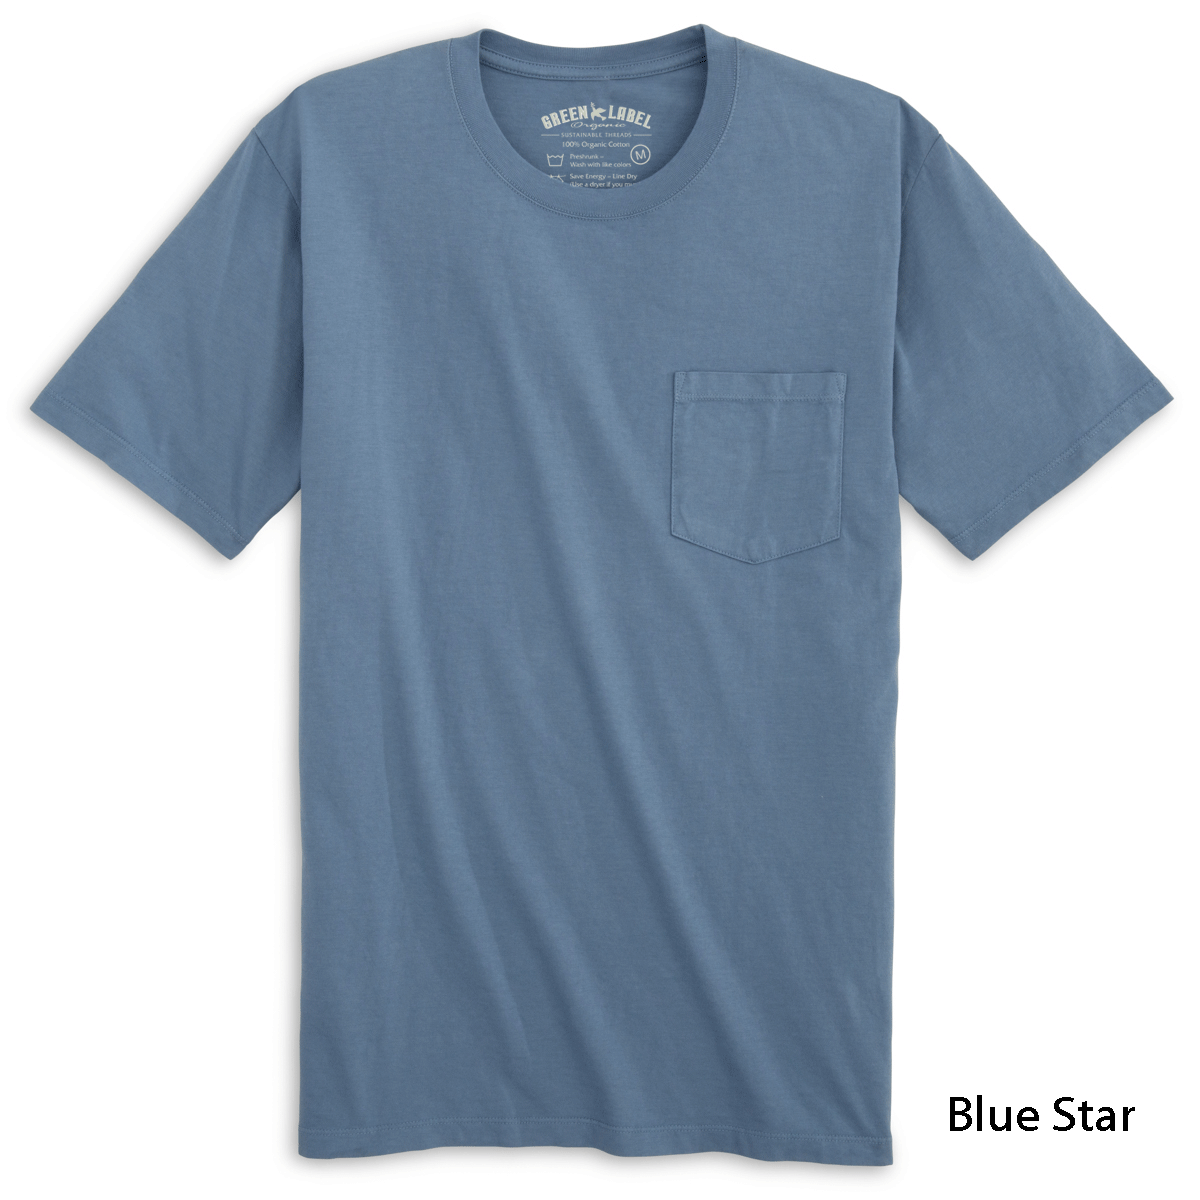 Men's Solid Organic Short Sleeve T-Shirts